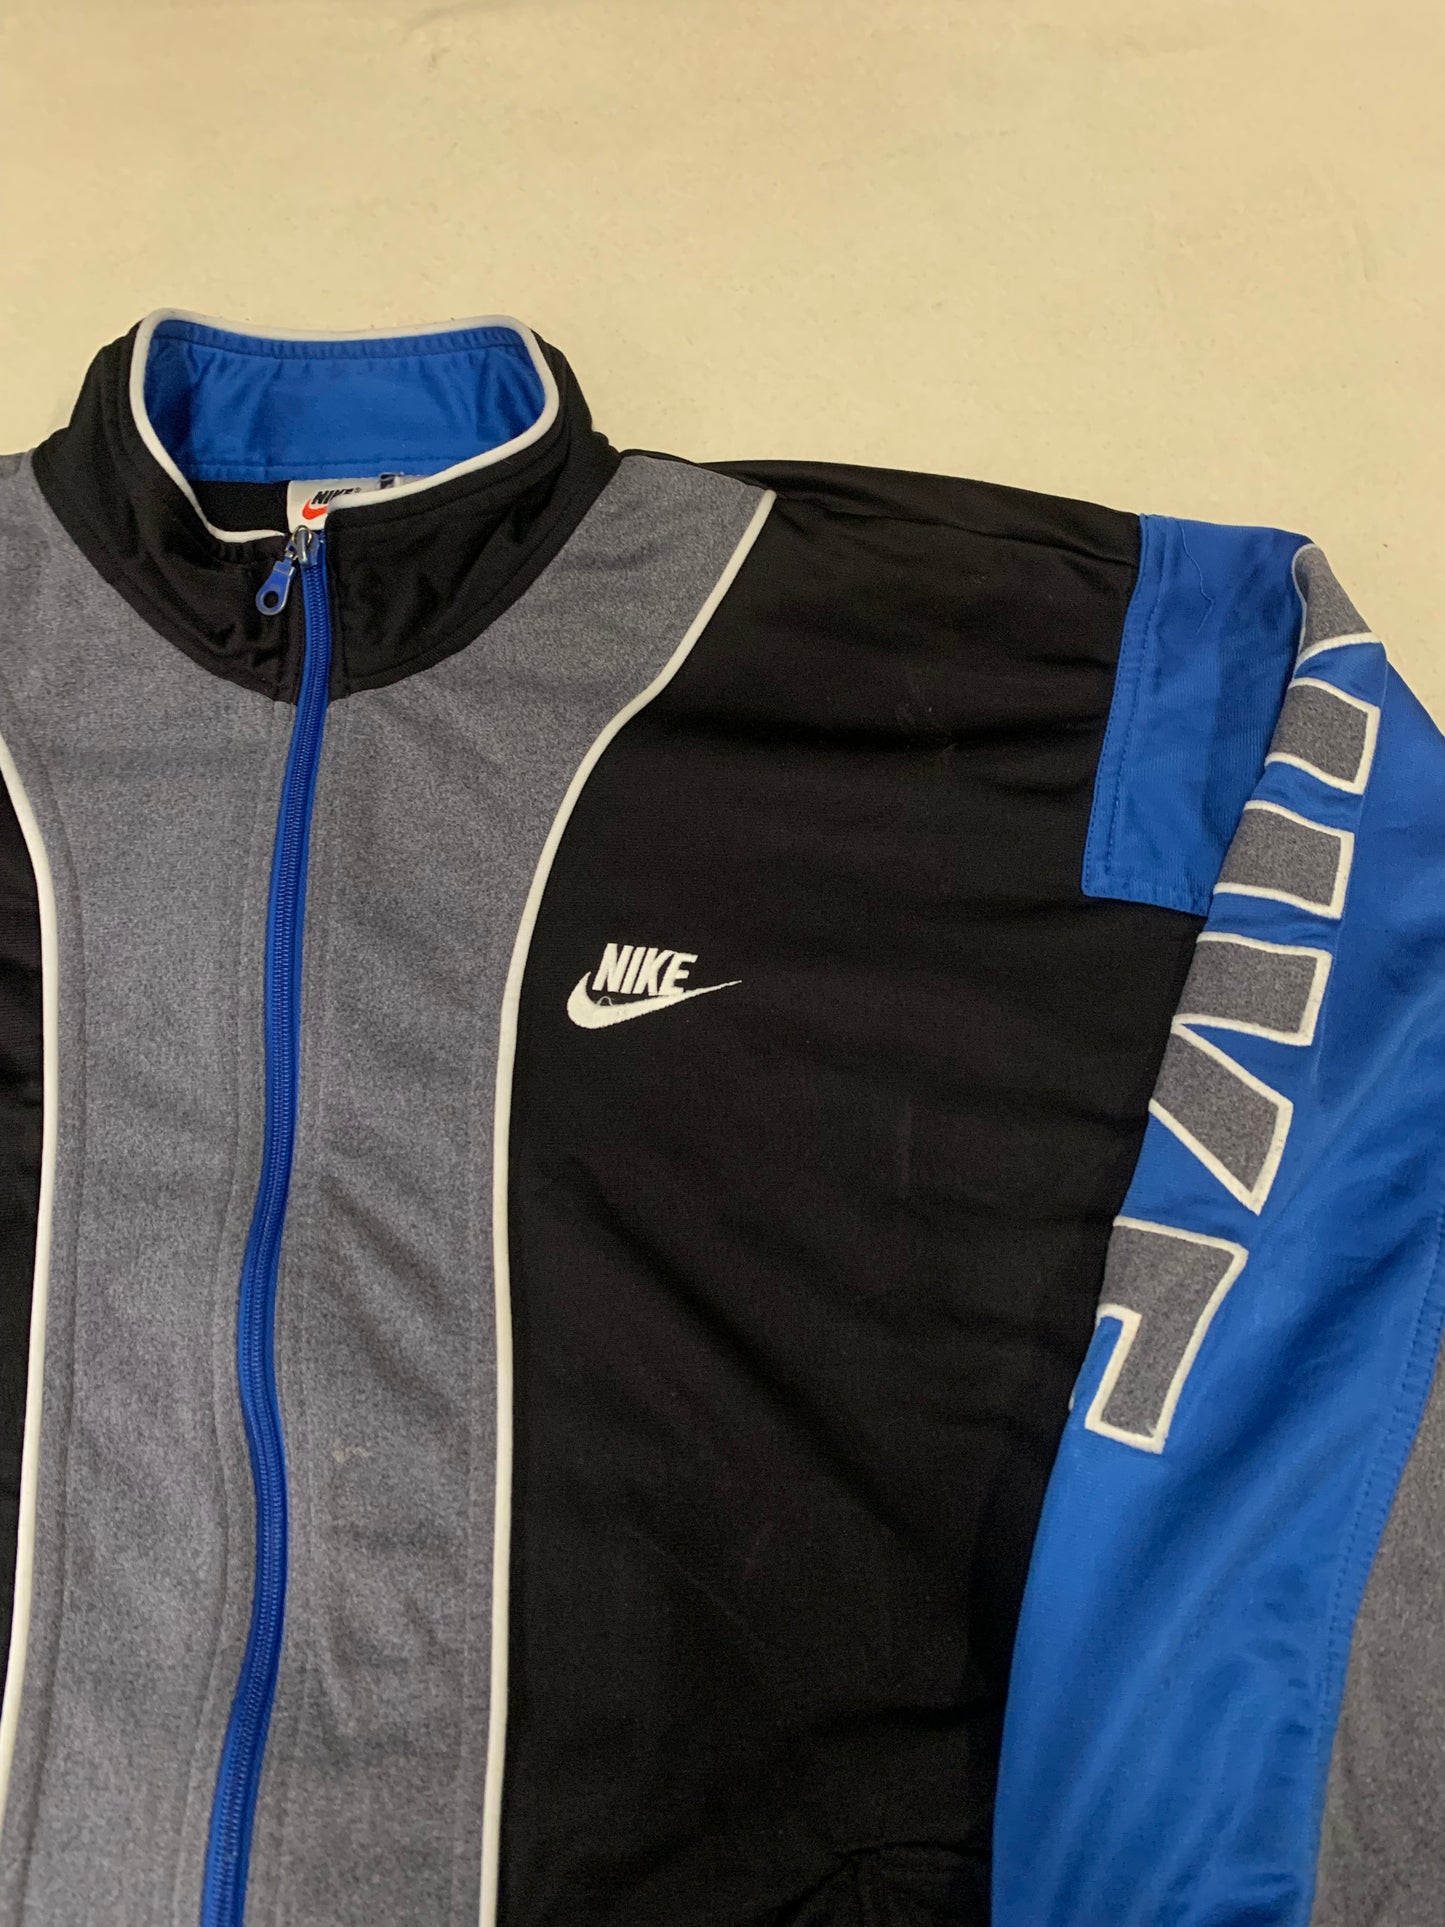 Vintage Nike 90's Jacket - Xl